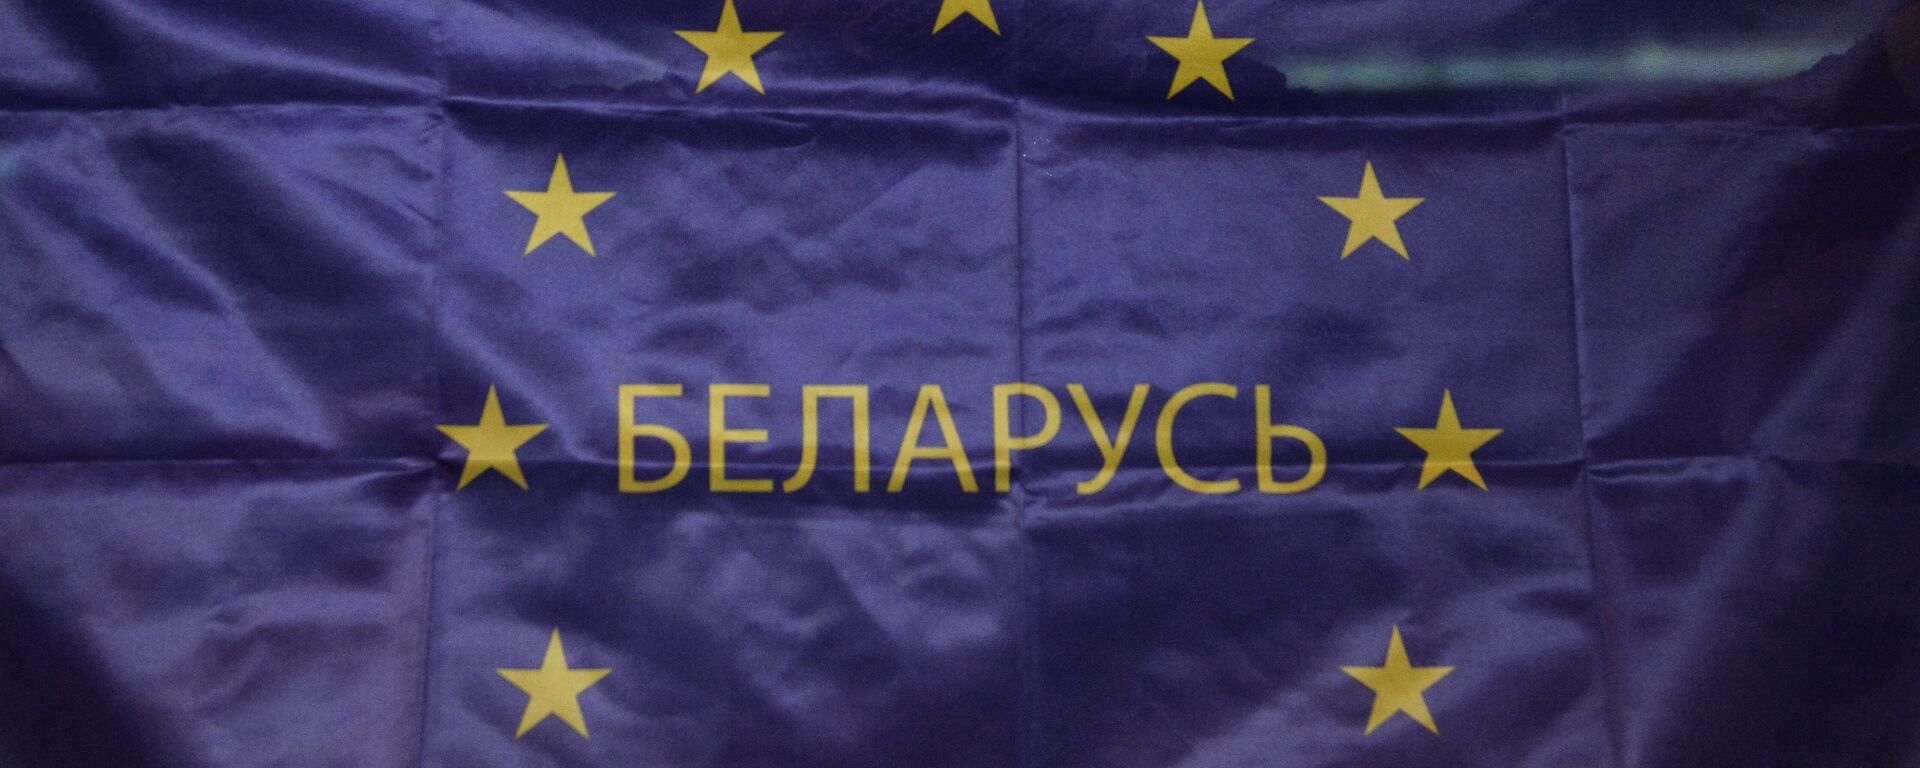 Belorusija, EU zastava  - Sputnik Srbija, 1920, 21.06.2021